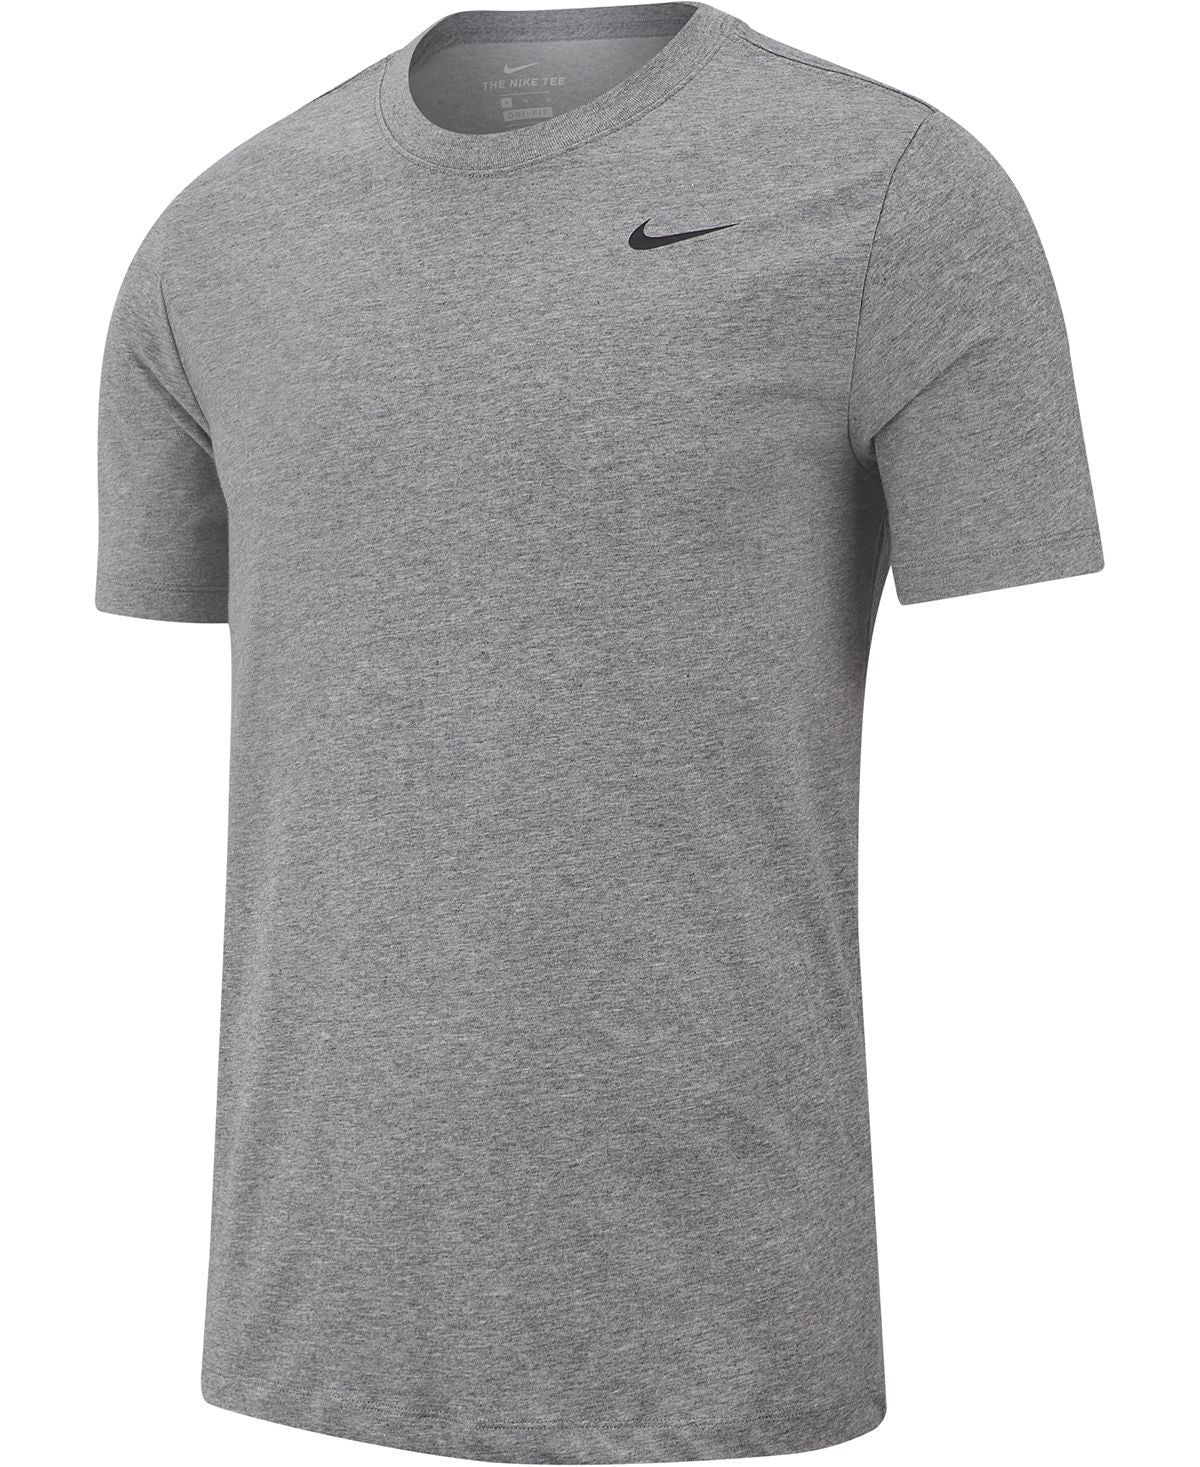 Nike Dri-fit Training T-shirt Carbon Heather